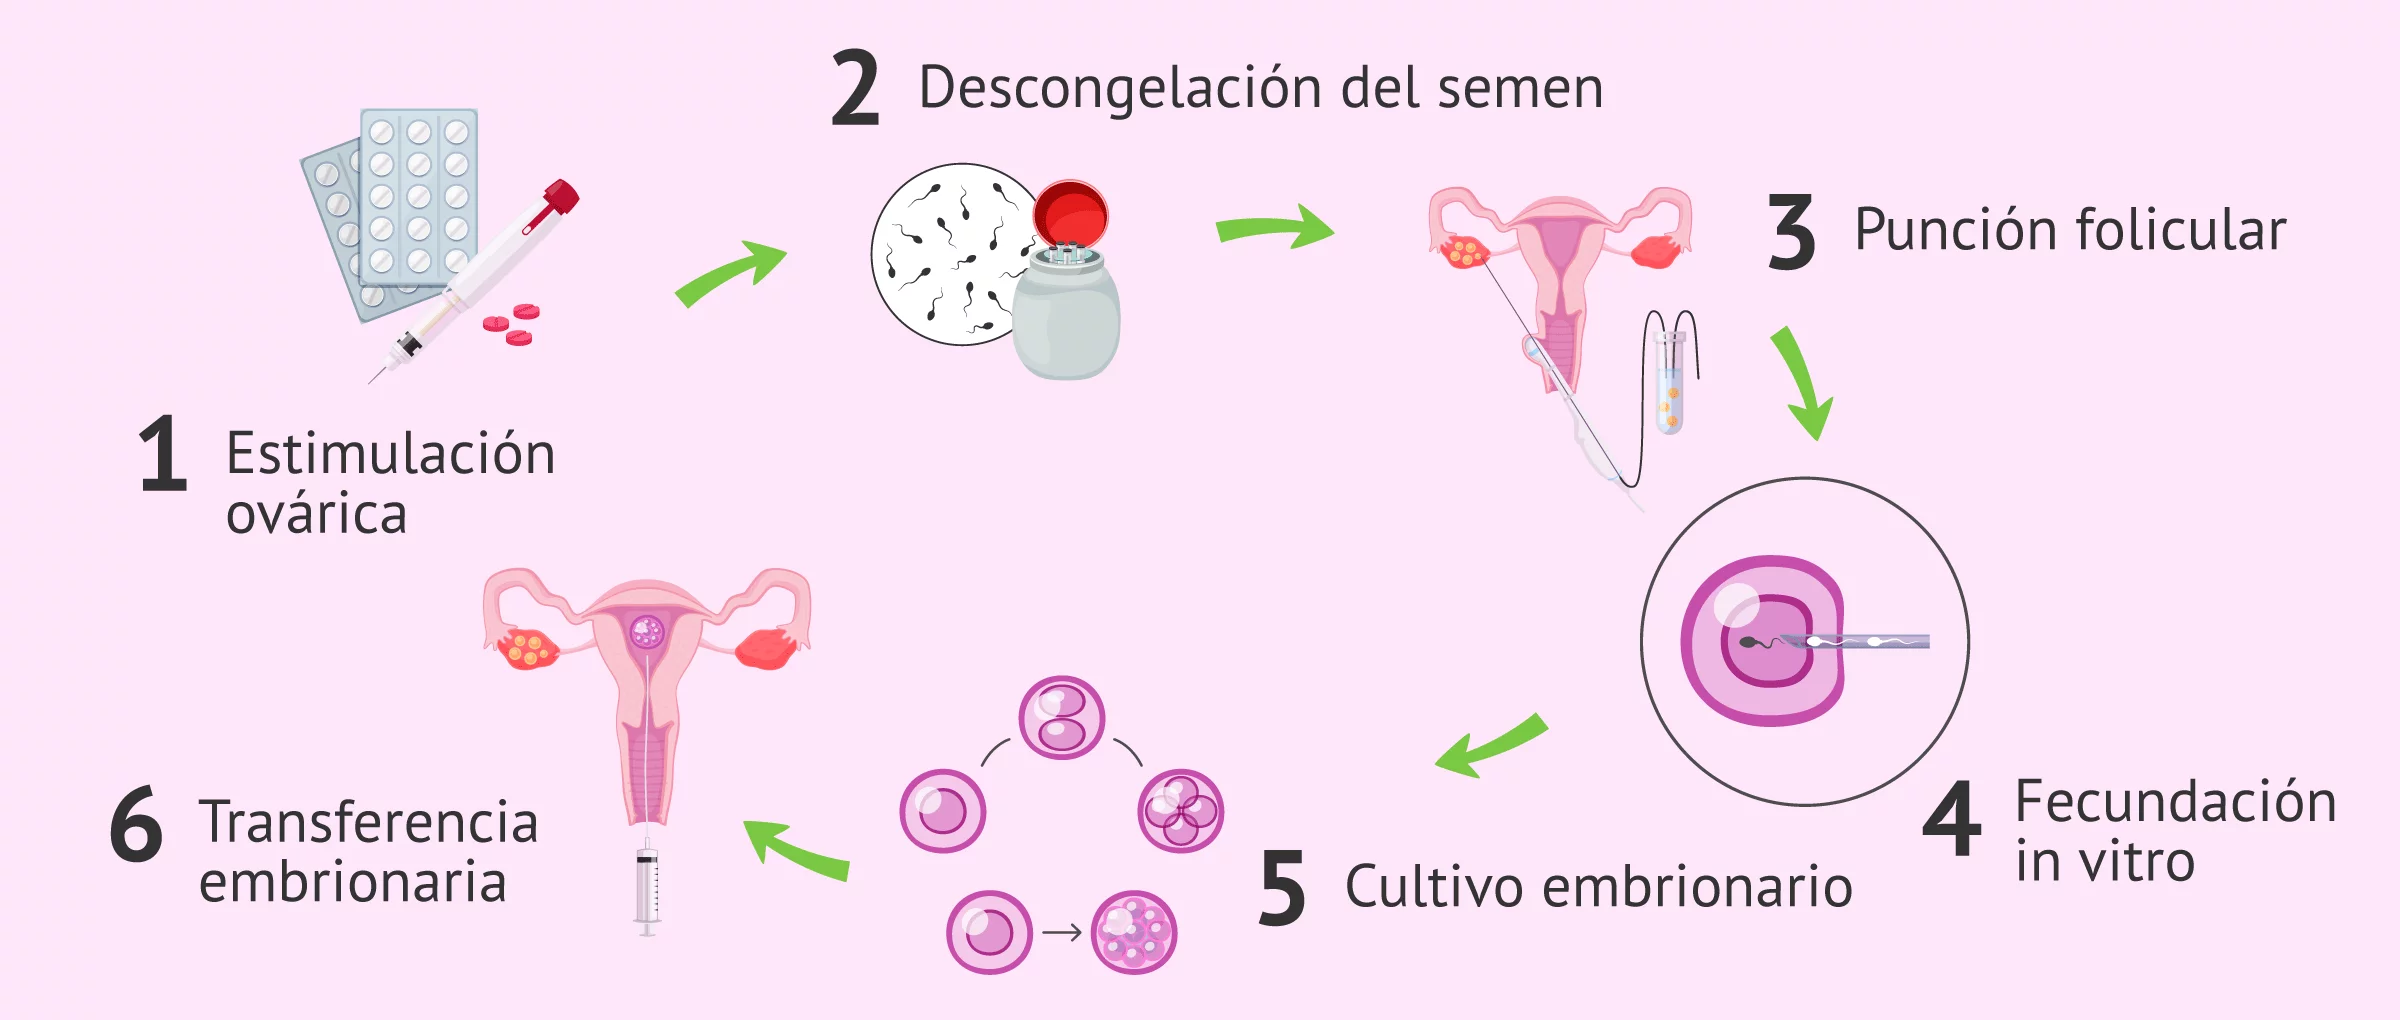 Kit de inseminación artificial casera